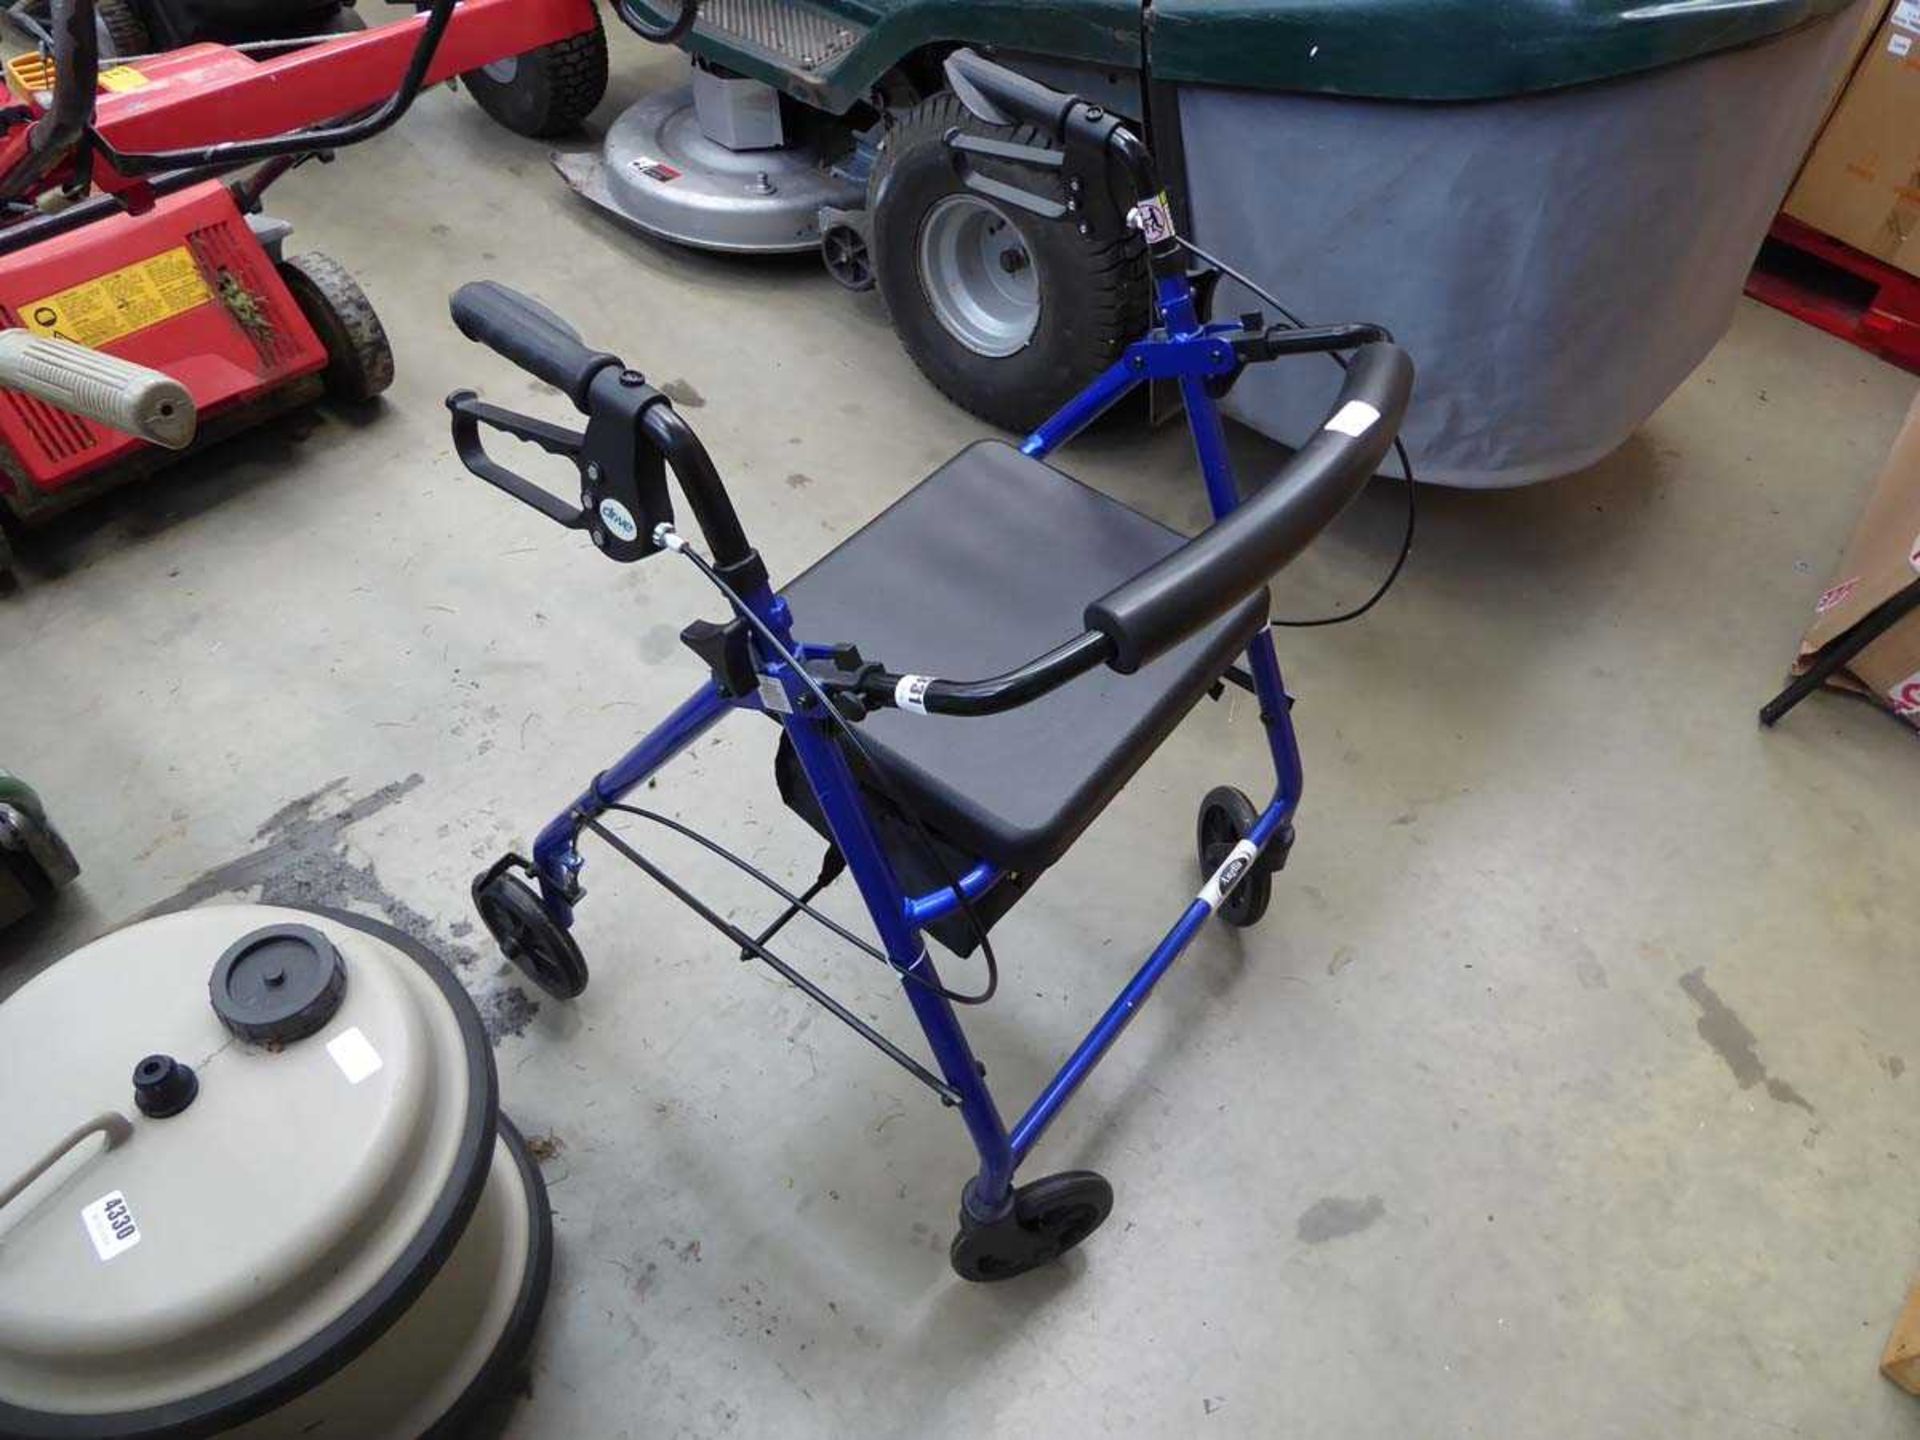 Four wheeled disability walking aid